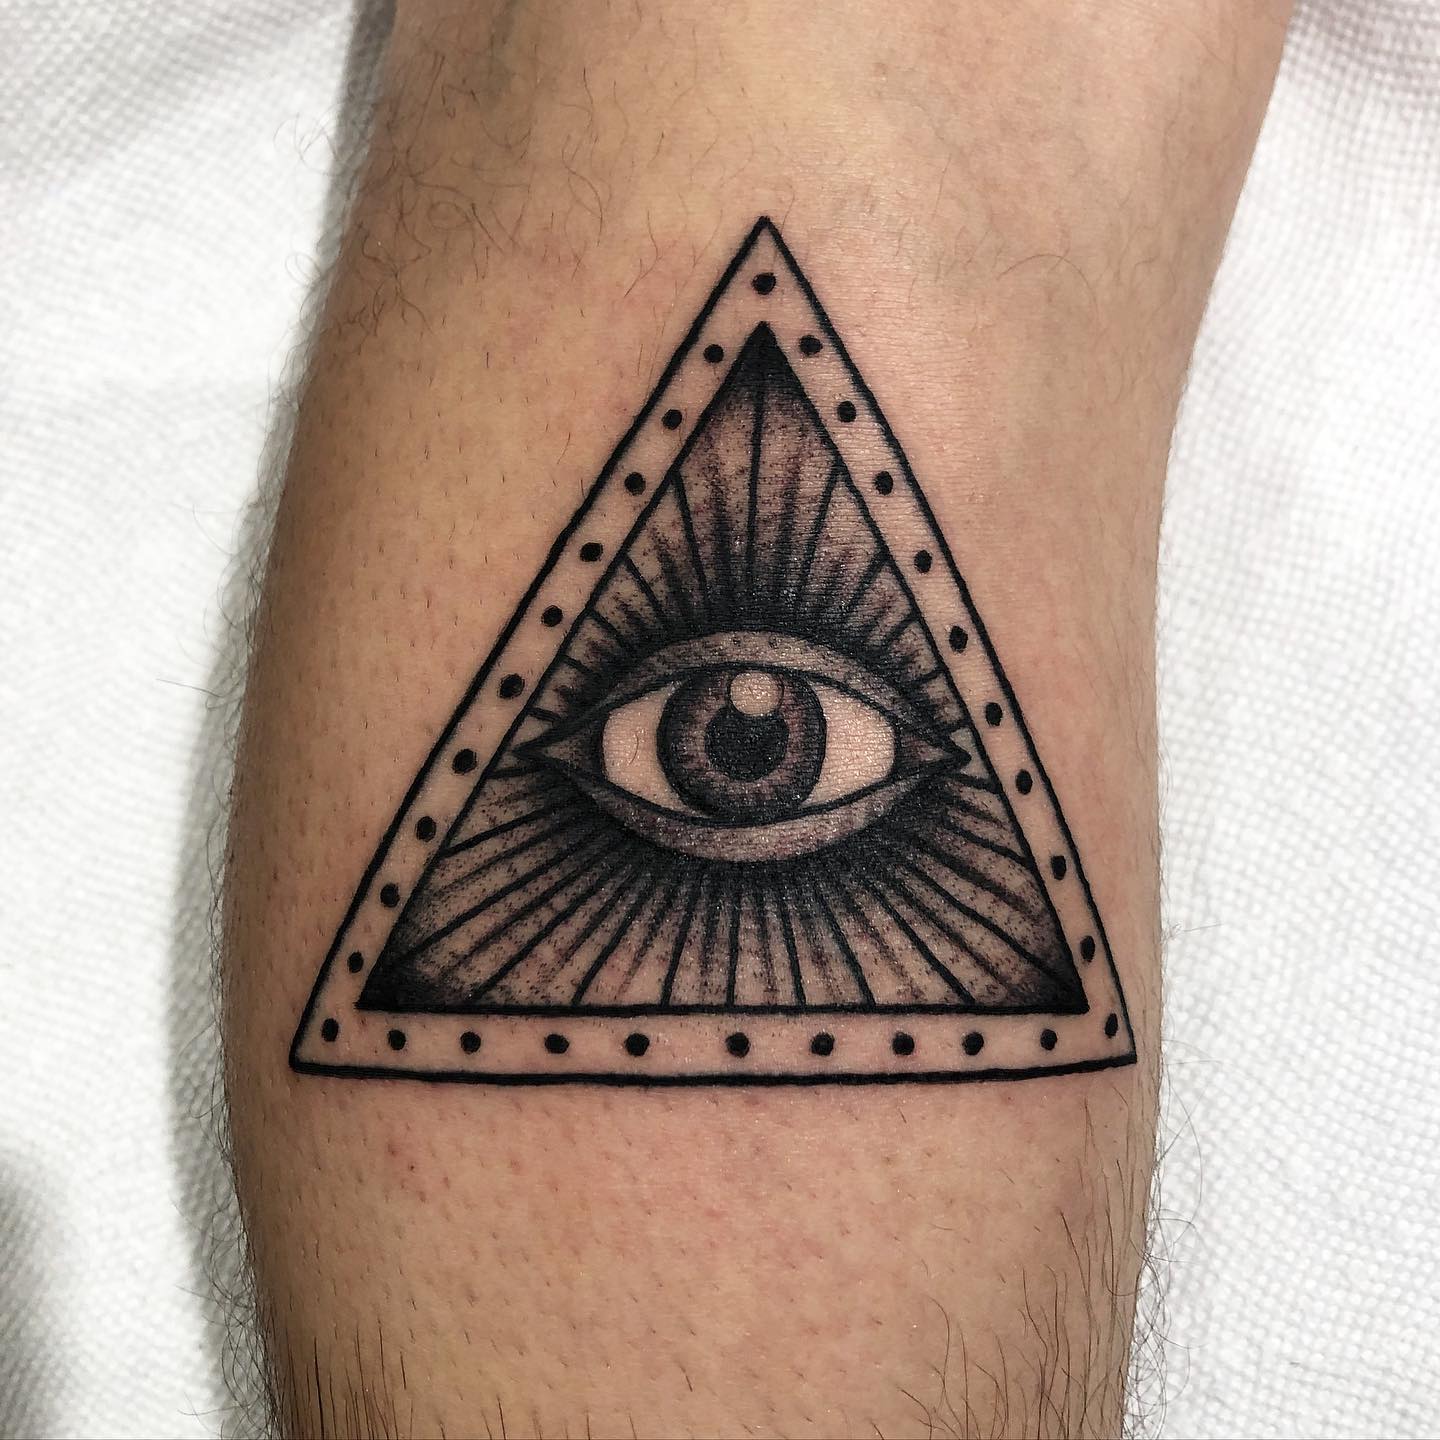 Evil Eye Tattoos: 30+ Unique Designs, History & Symbolism - 100 Tattoos